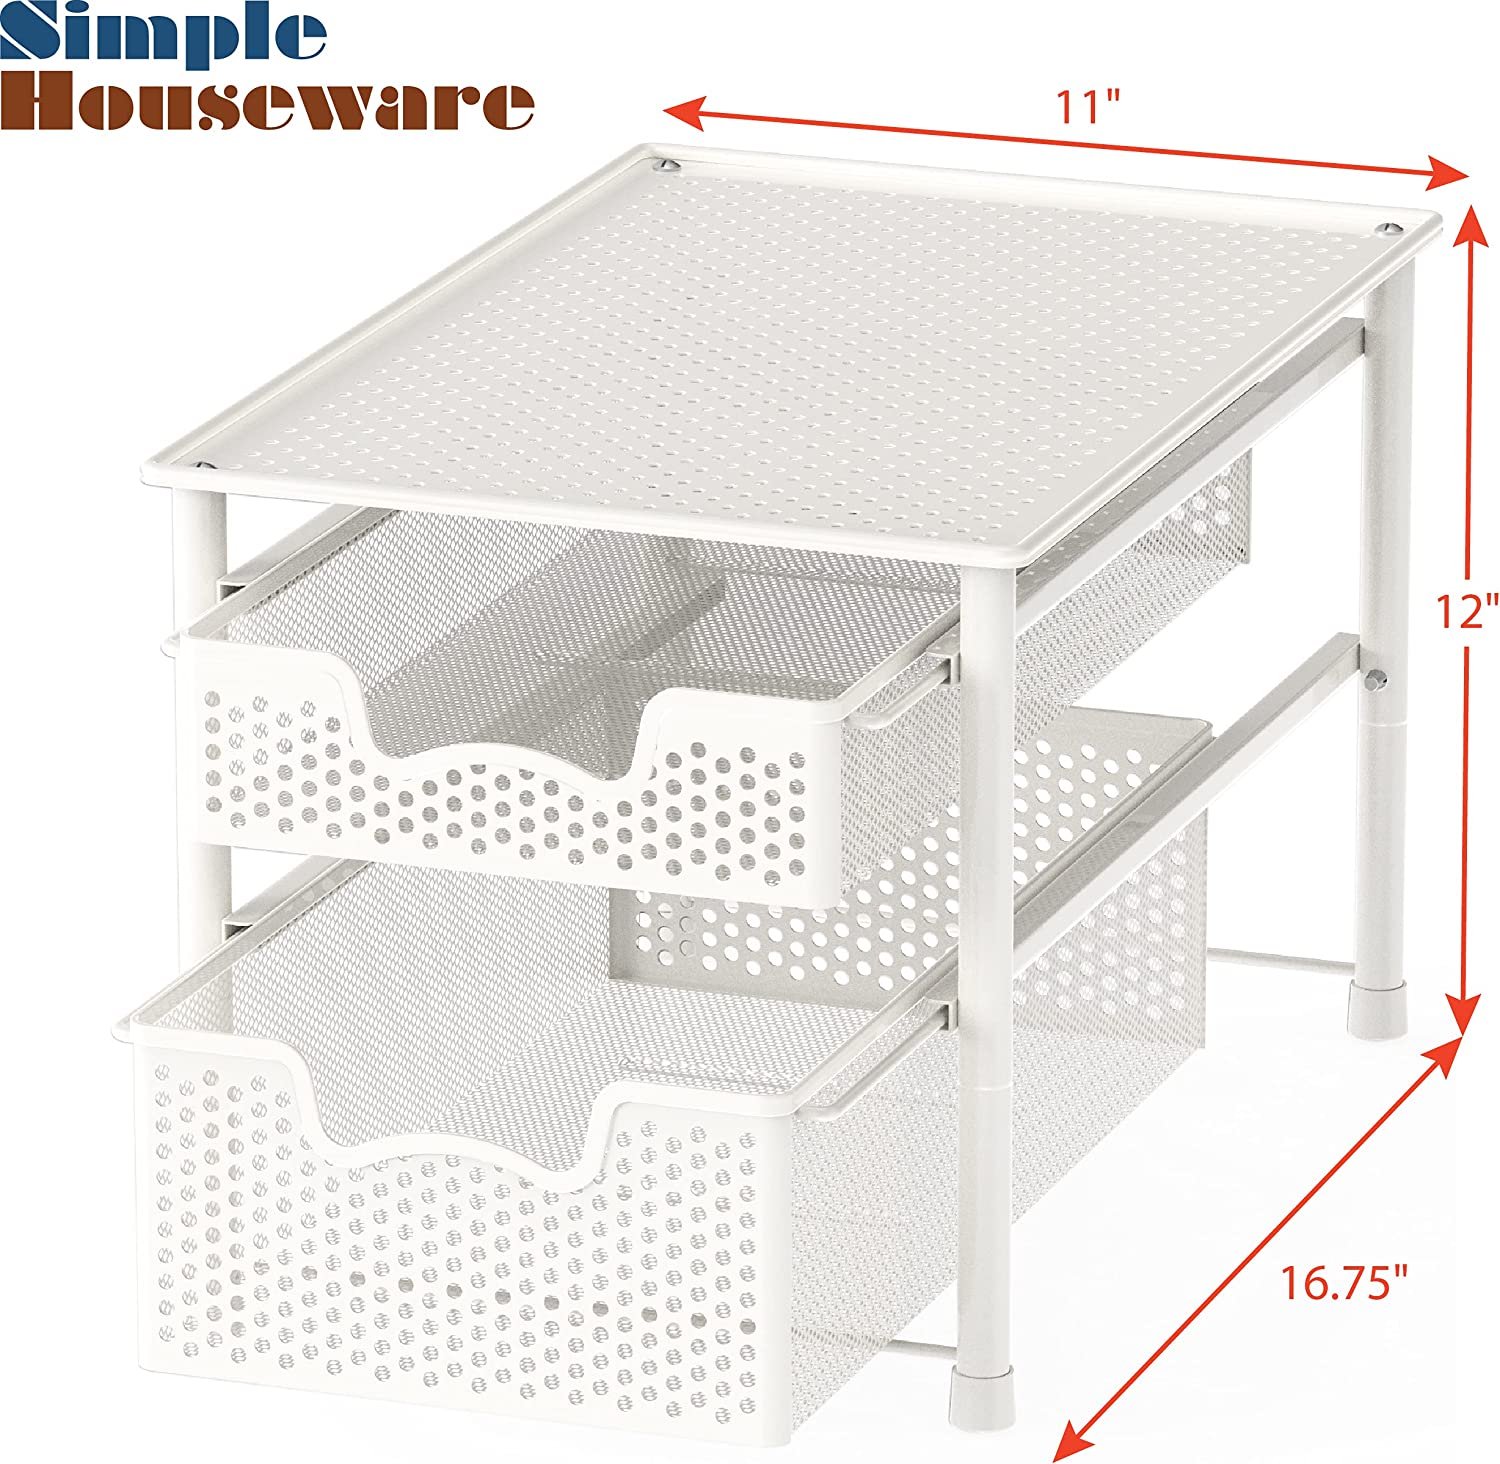 Simple Houseware Tier Sliding Basket Organizer Drawer